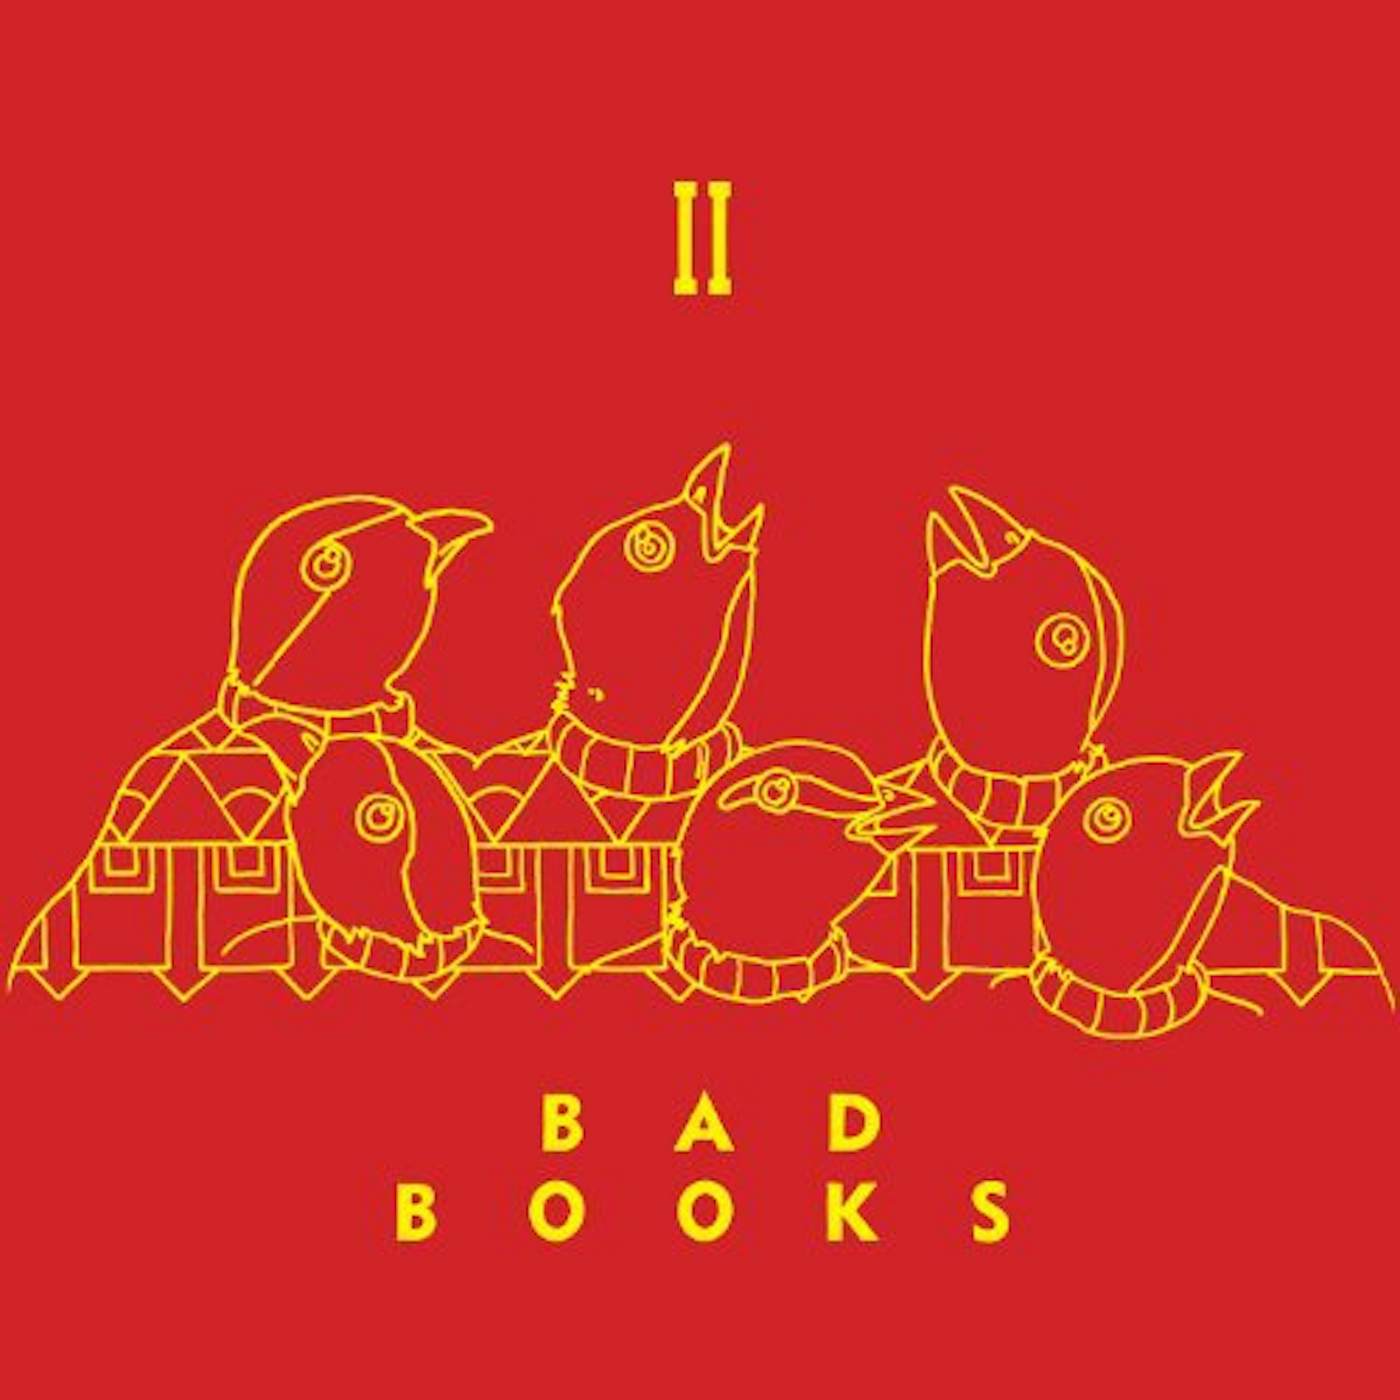 Bad Books II Vinyl Record - Deluxe Edition